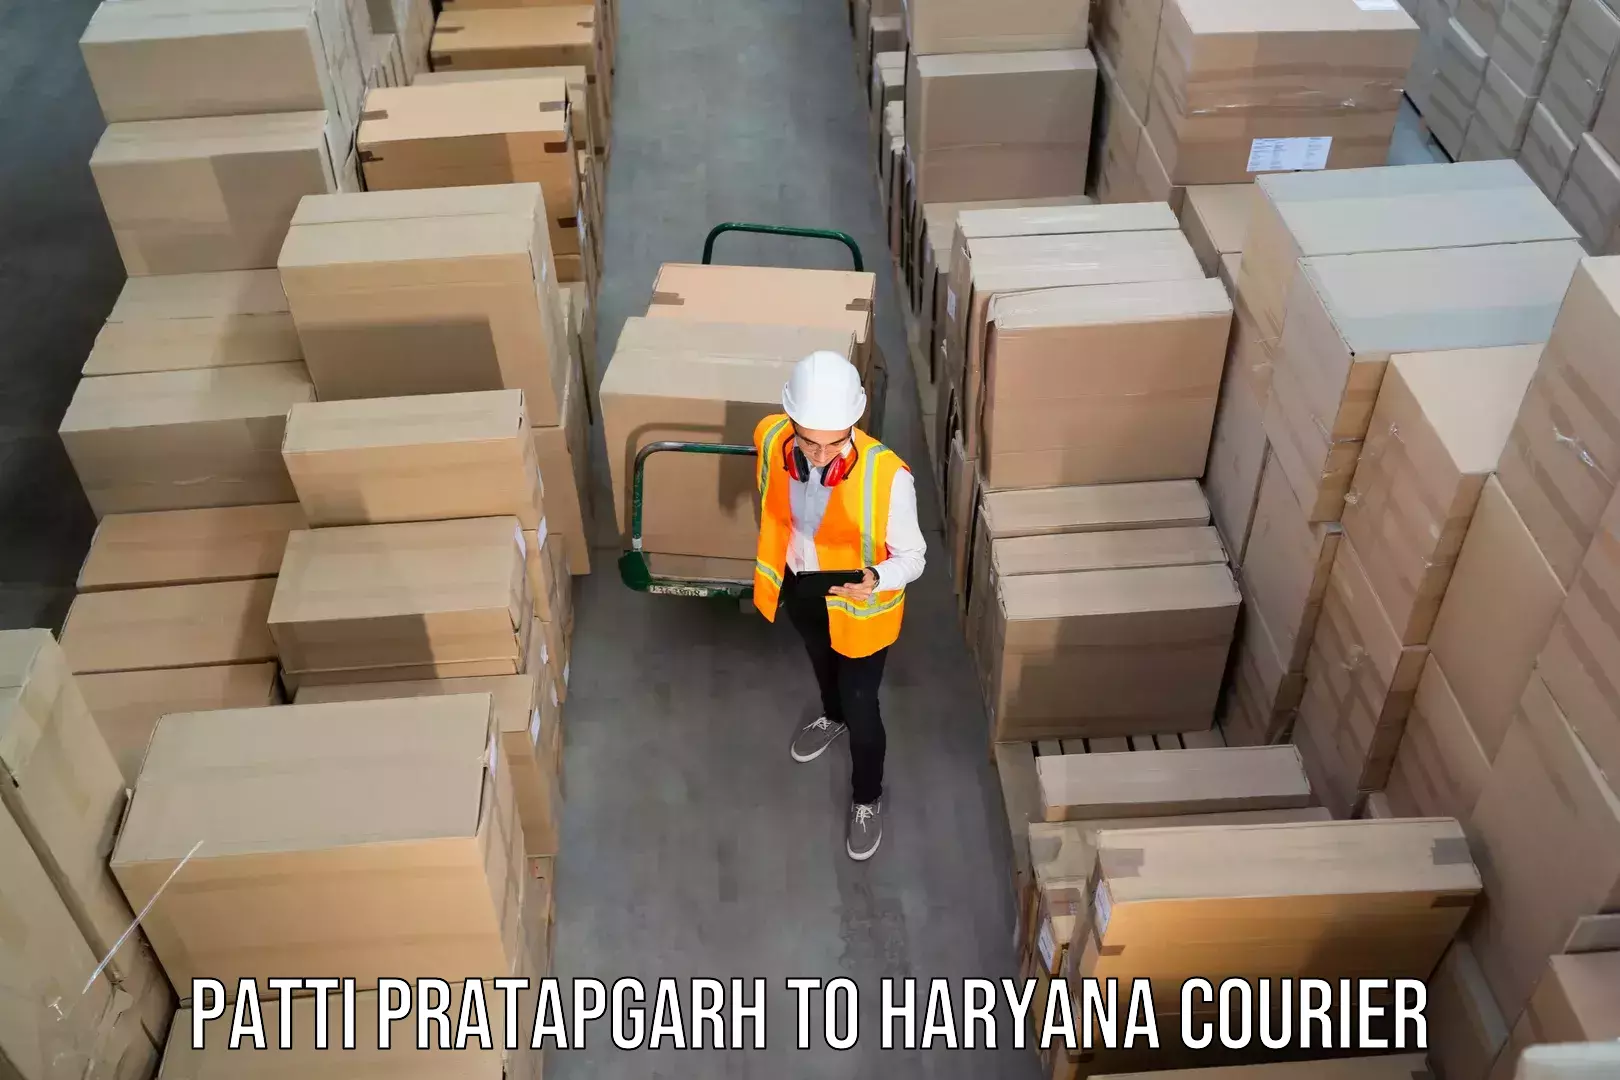 Reliable courier service Patti Pratapgarh to Julana